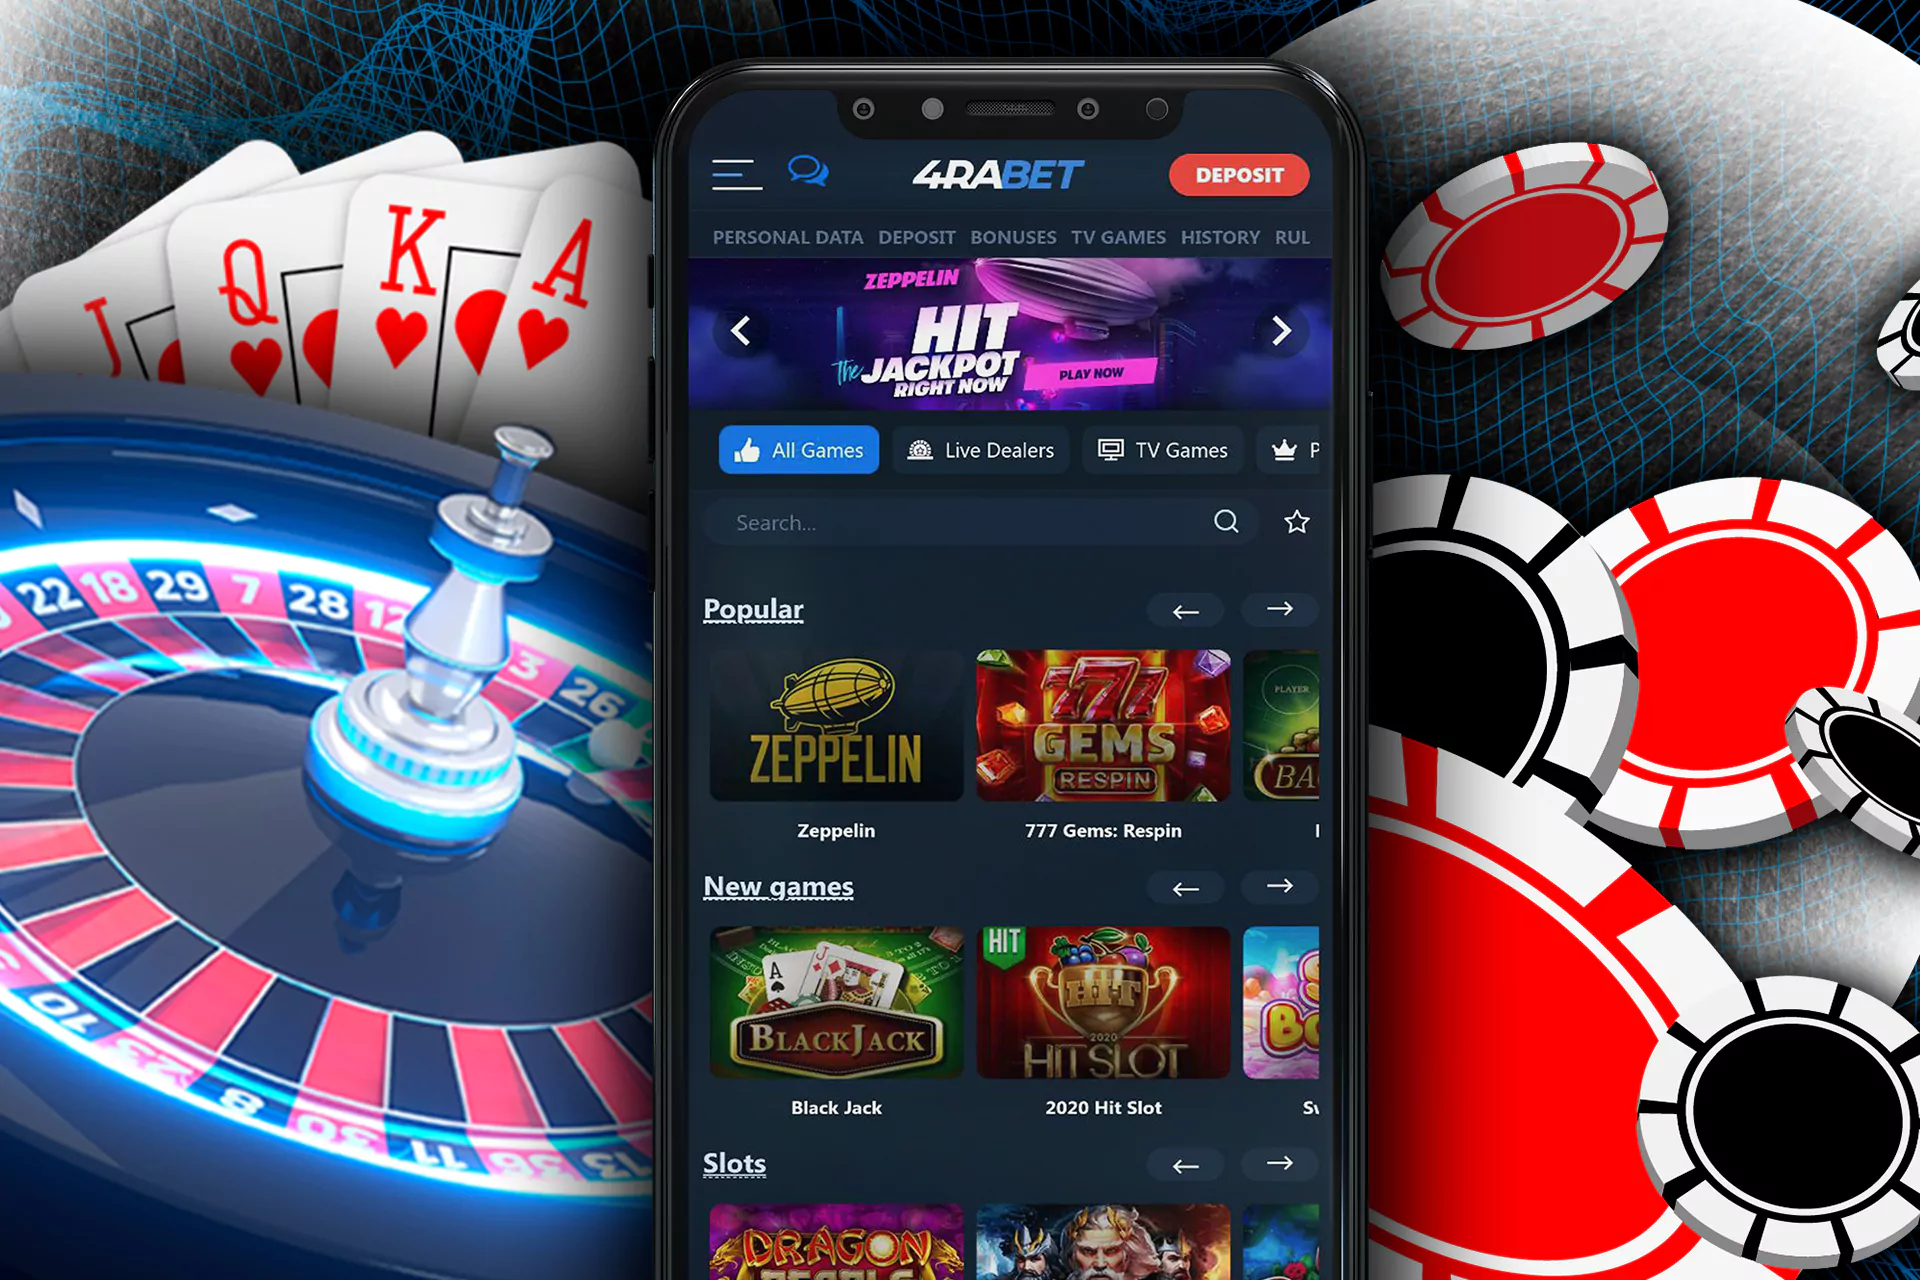 Start playing casino games through the app.